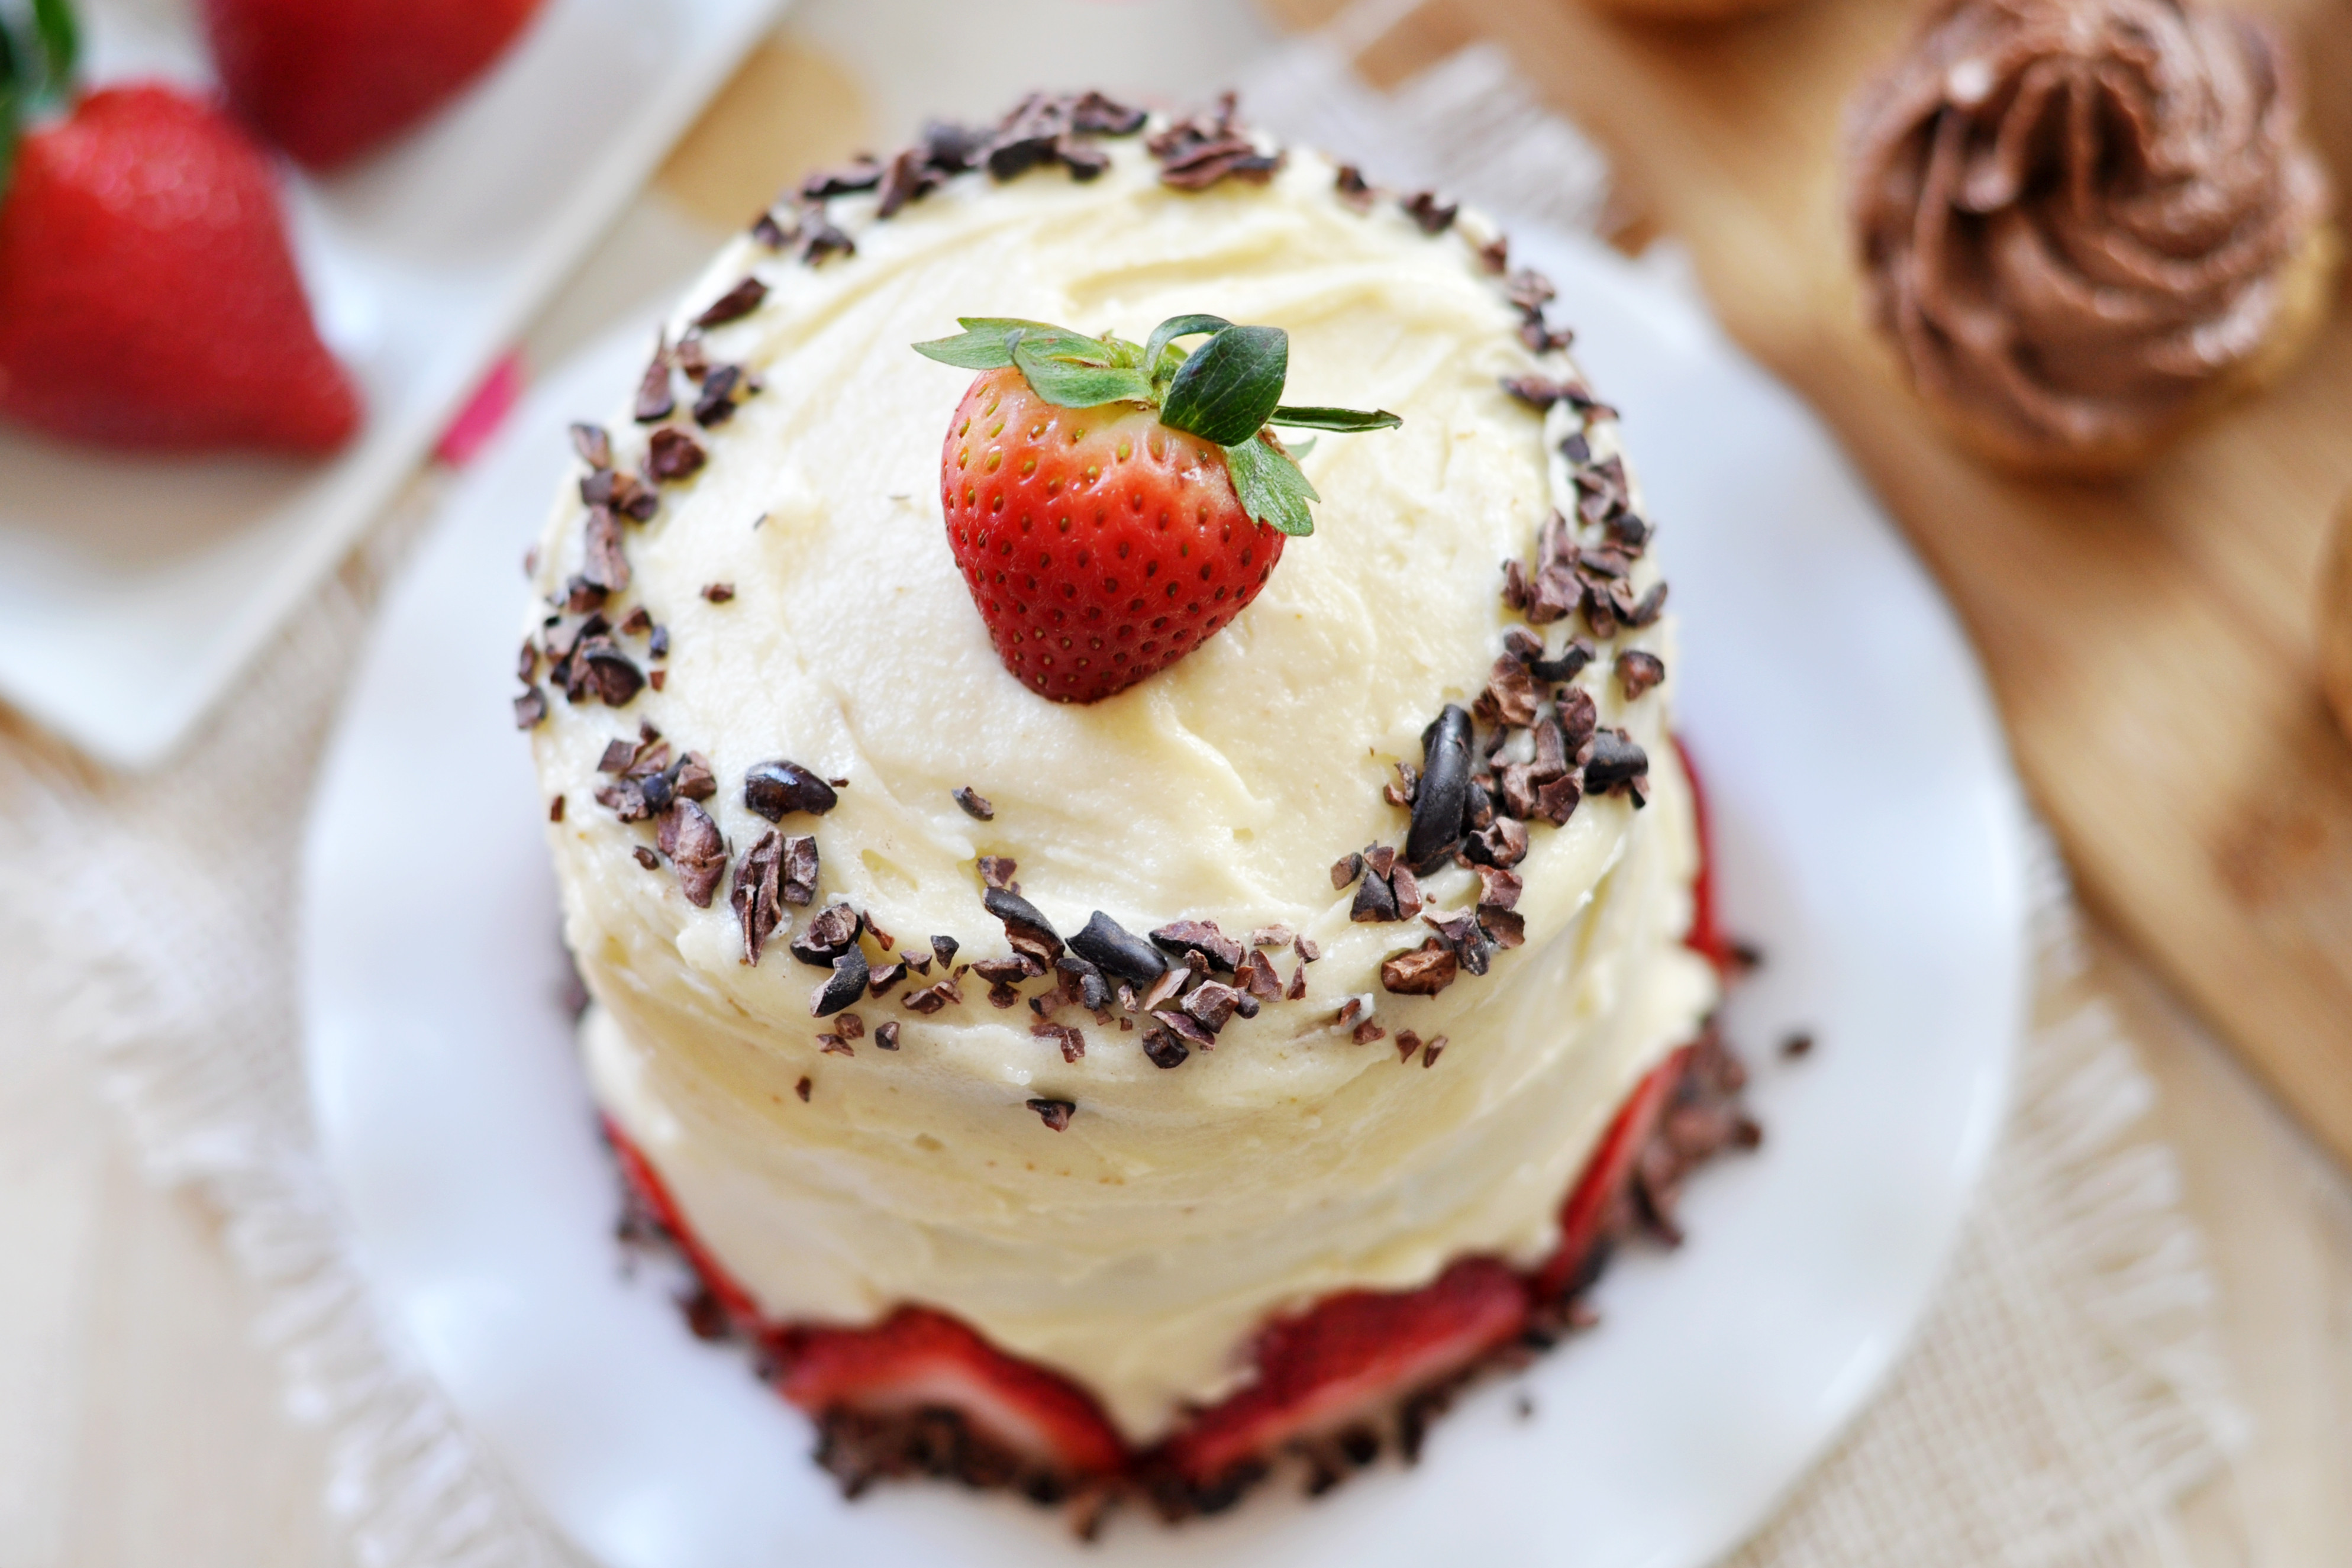 Best ideas about Gluten Free Birthday Cake Recipe
. Save or Pin Classic Vanilla Birthday Cake Vegan Gluten Free The Now.